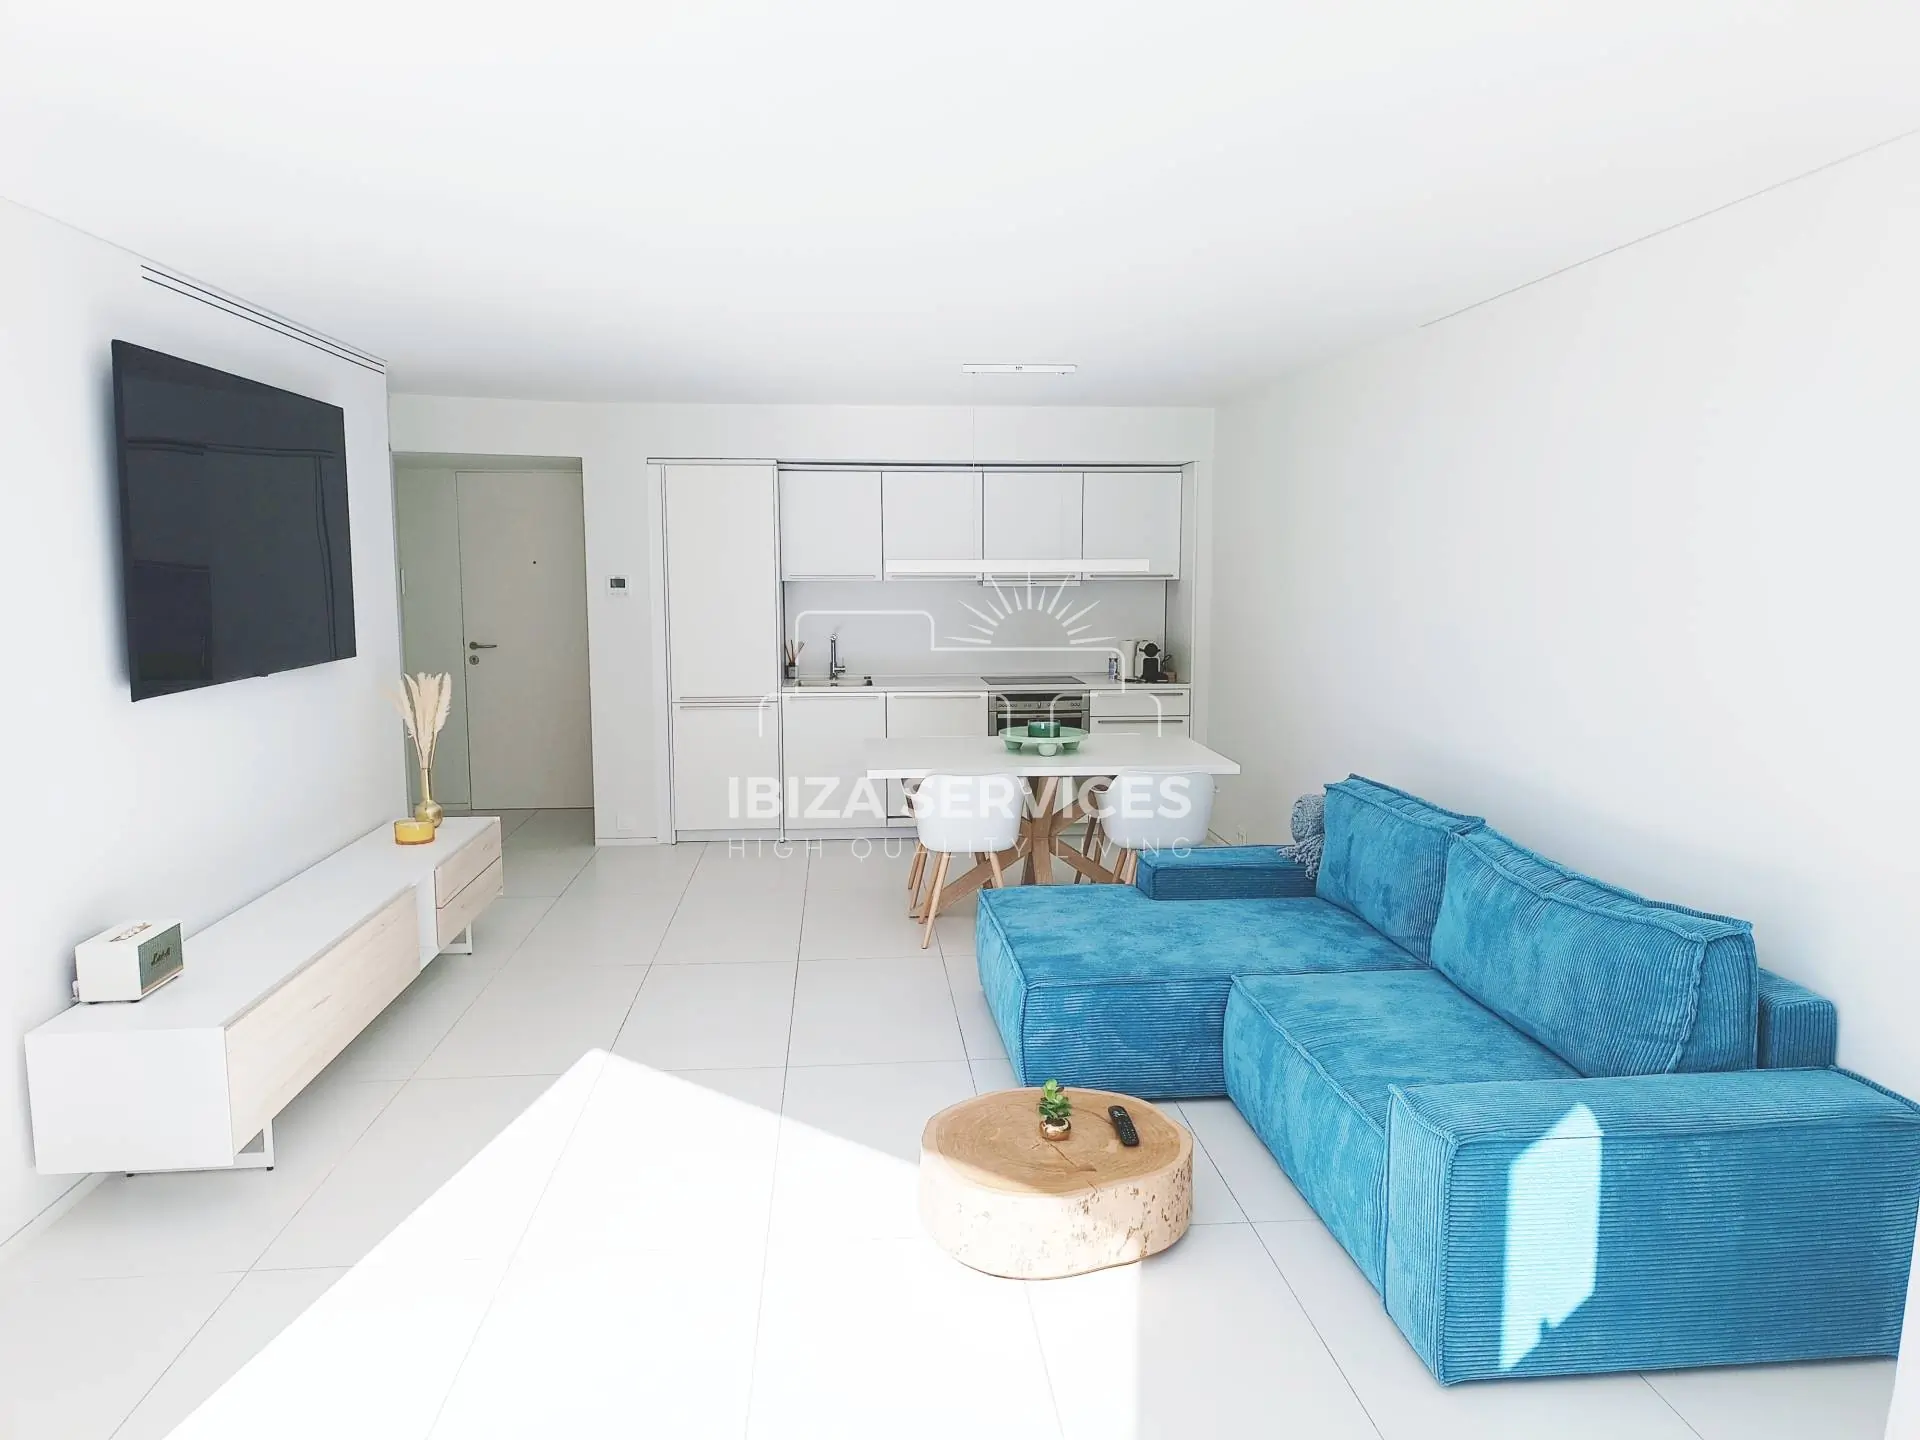 Seizoensverhuur Patio Blanco – Luxe 2 slaapkamers, 2 badkamers